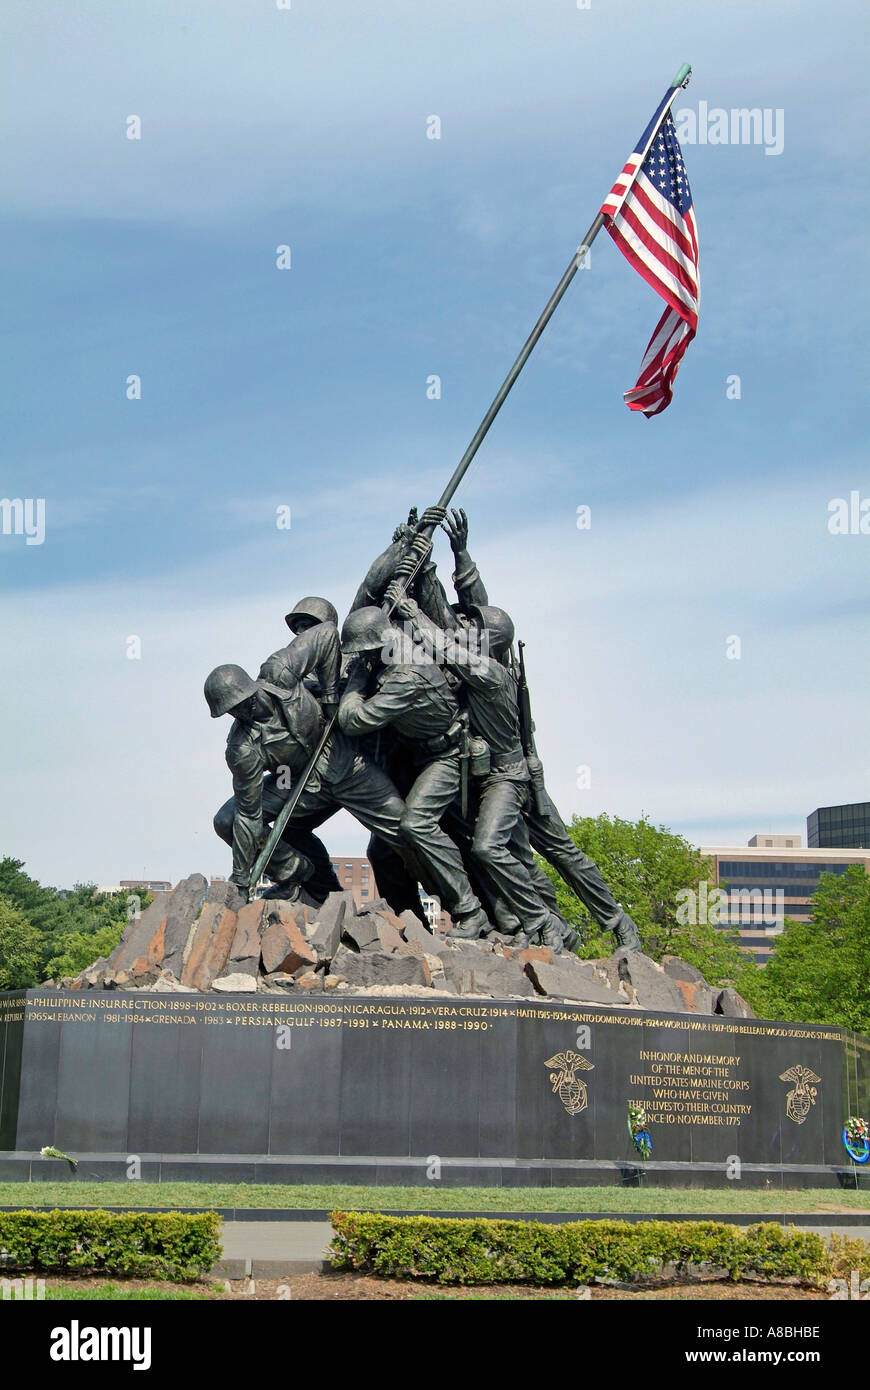 The Marine Corps Statue of Raising the Flag at Iwo Jima during World War II Stock Photo